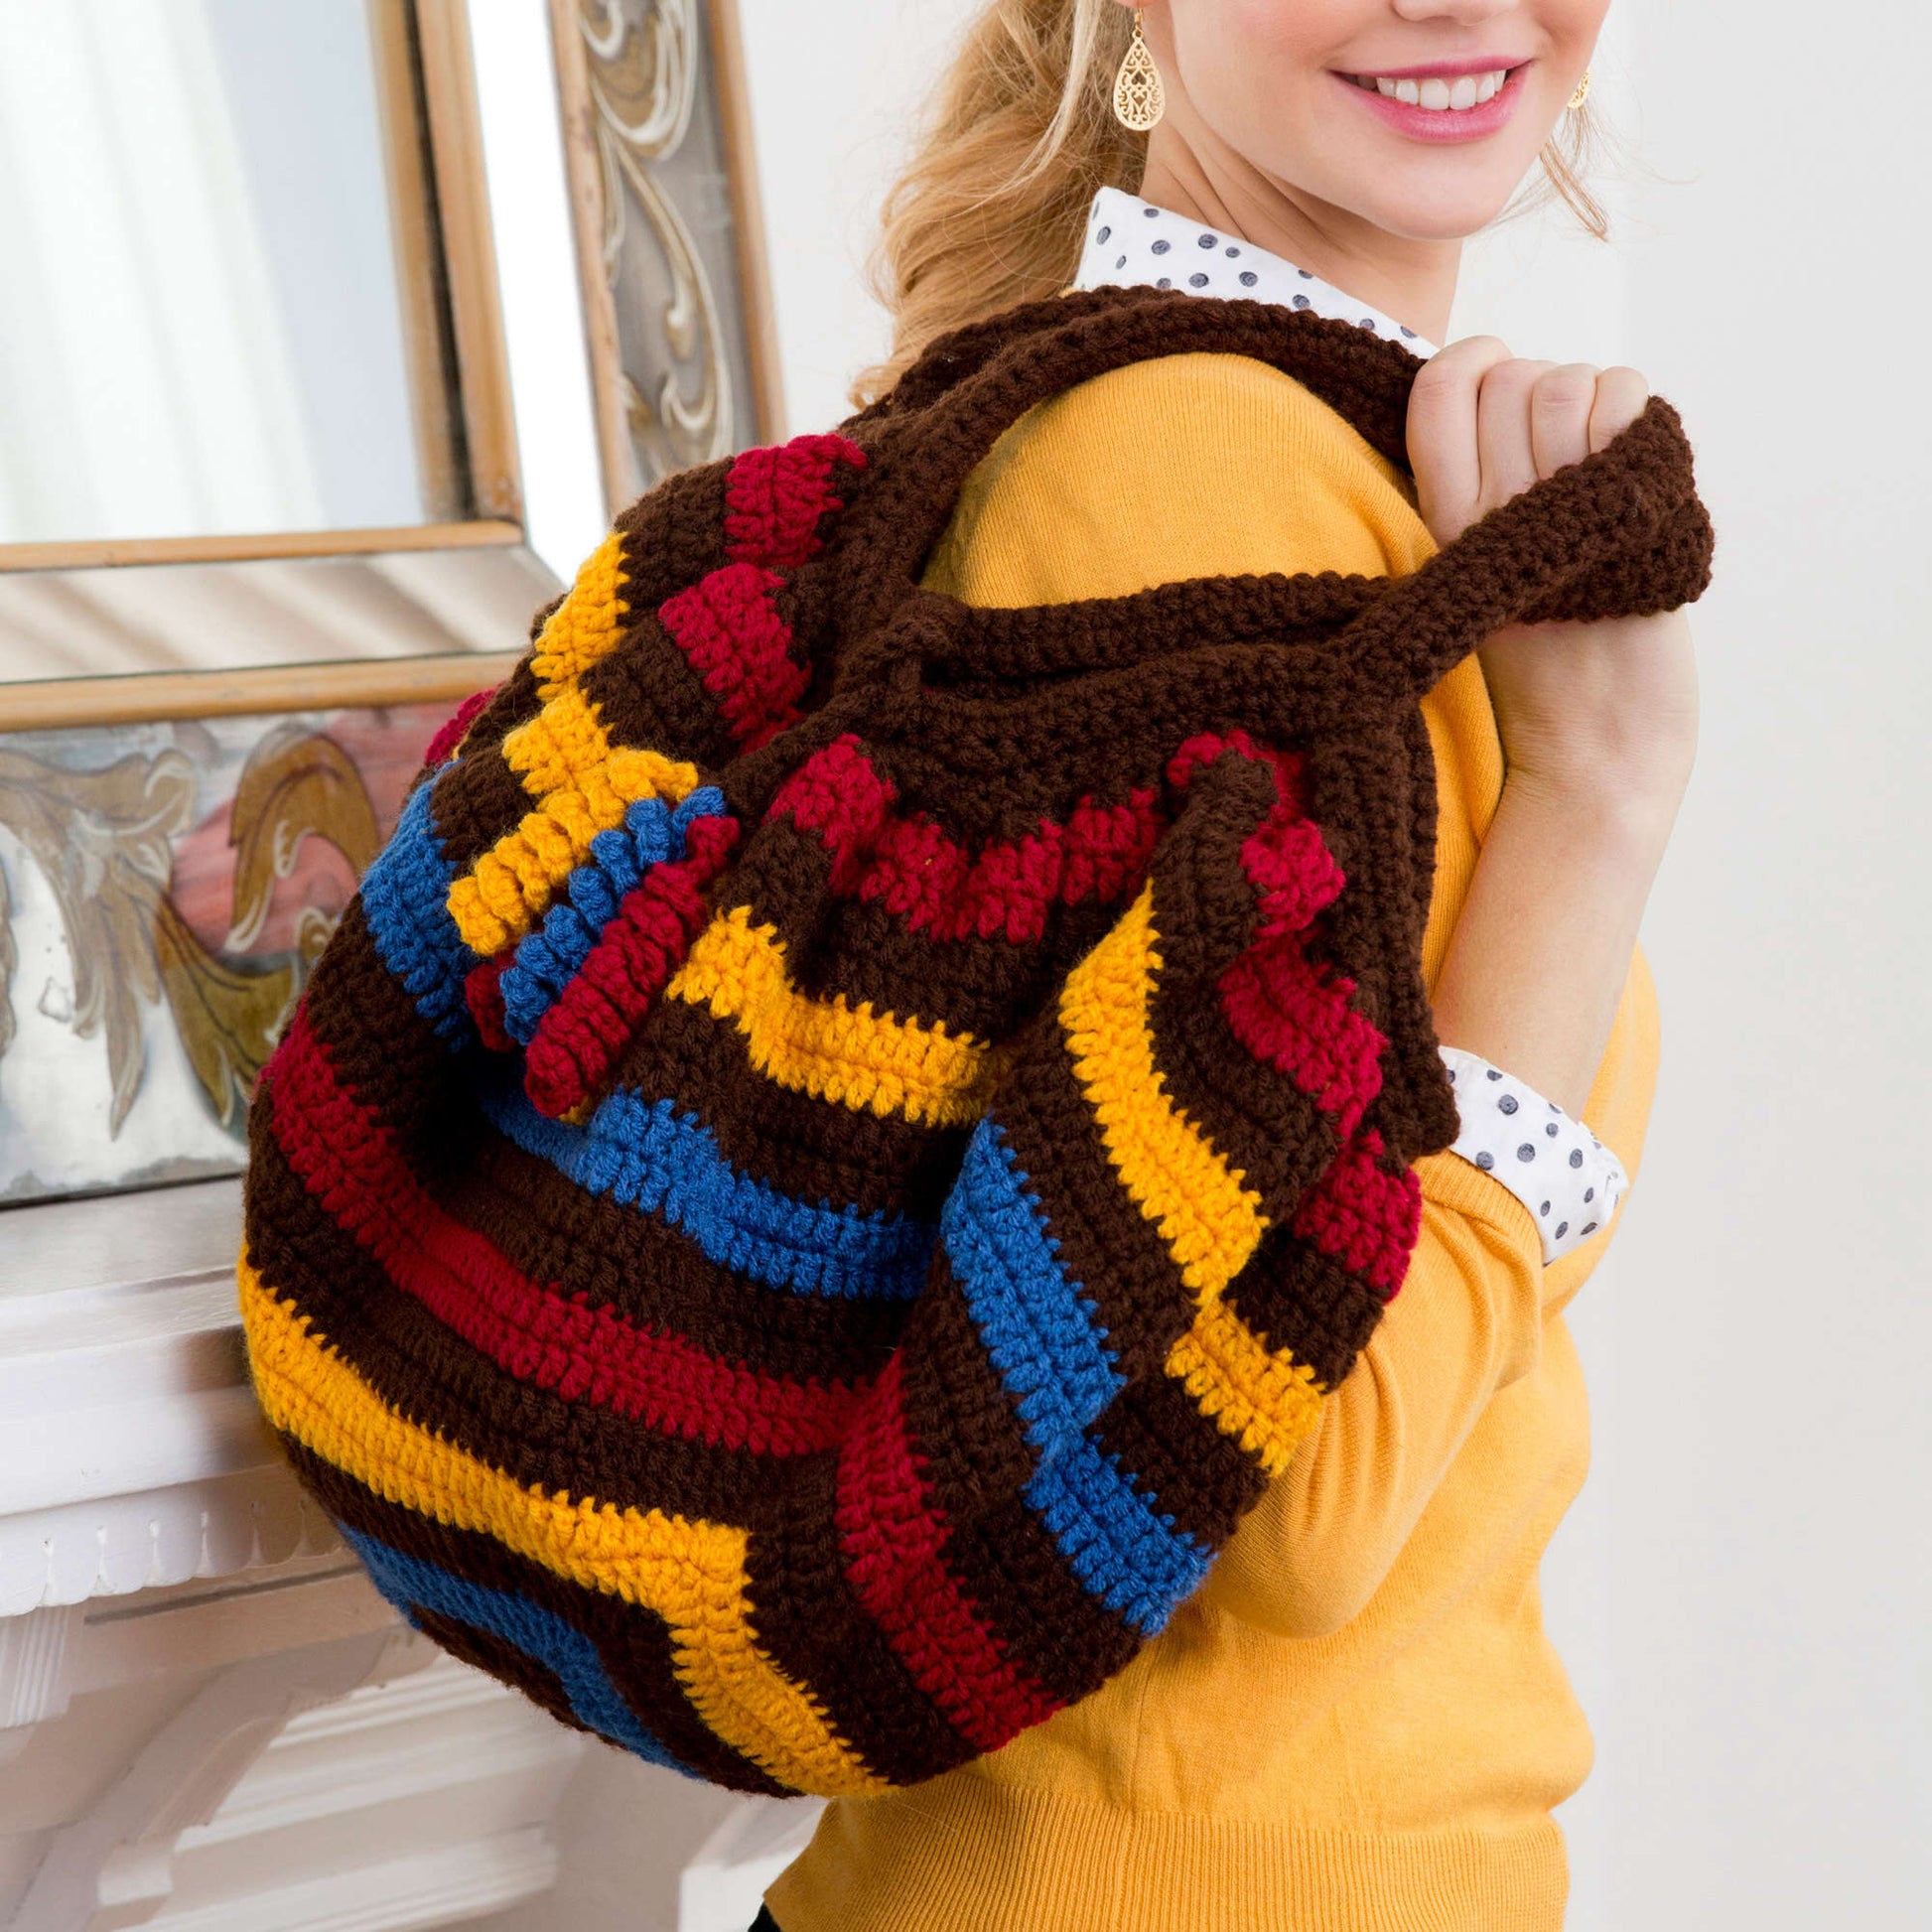 Free Red Heart Crochet Phat Fat Bag Pattern